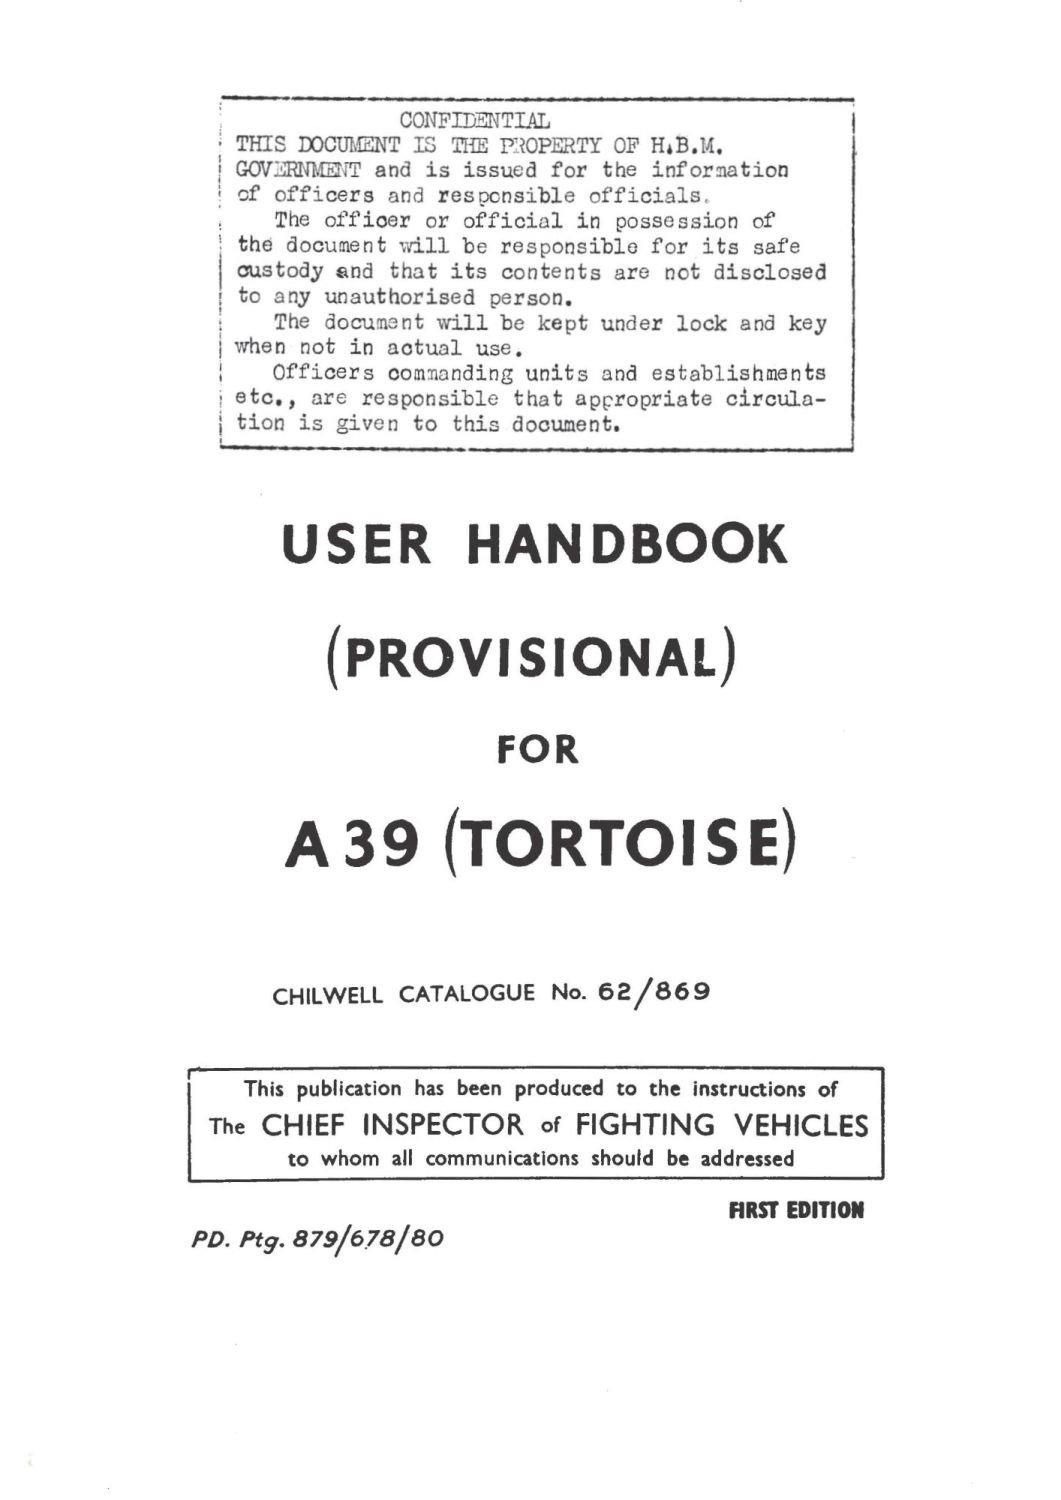 Tortoise (A39) Provisional User Handbook